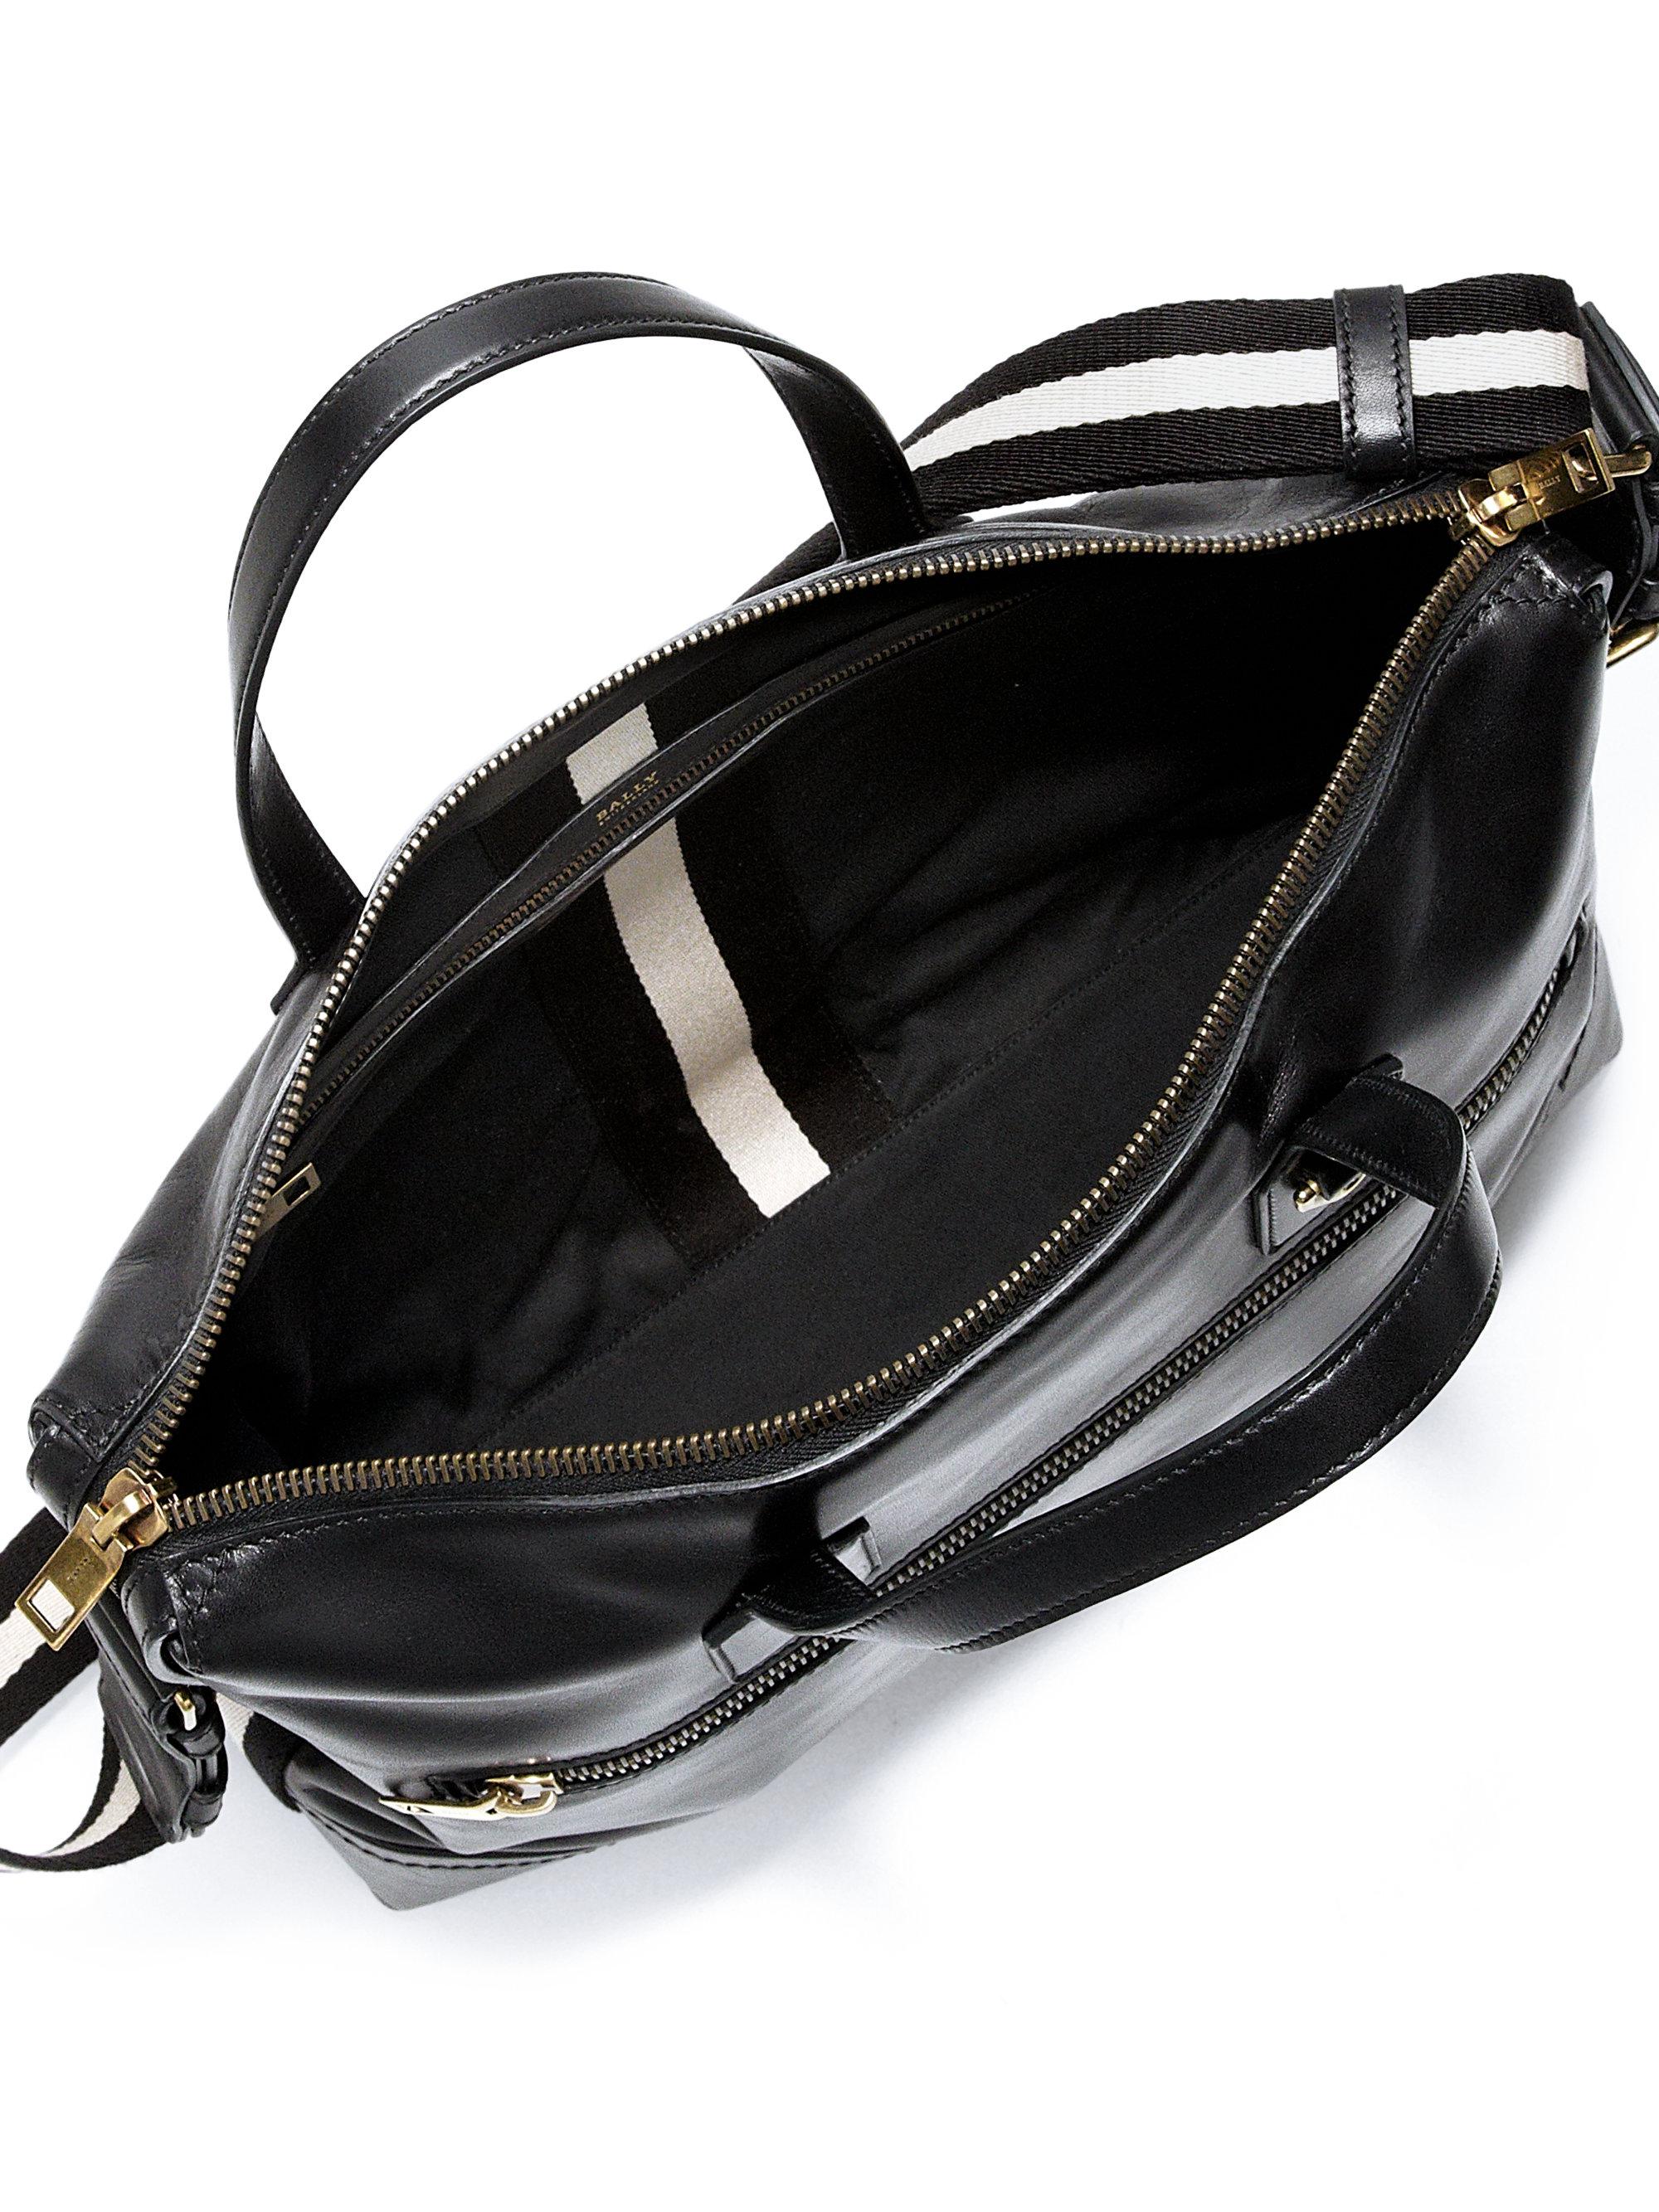 Lyst - Bally Novo Leather Business Bag in Black for Men